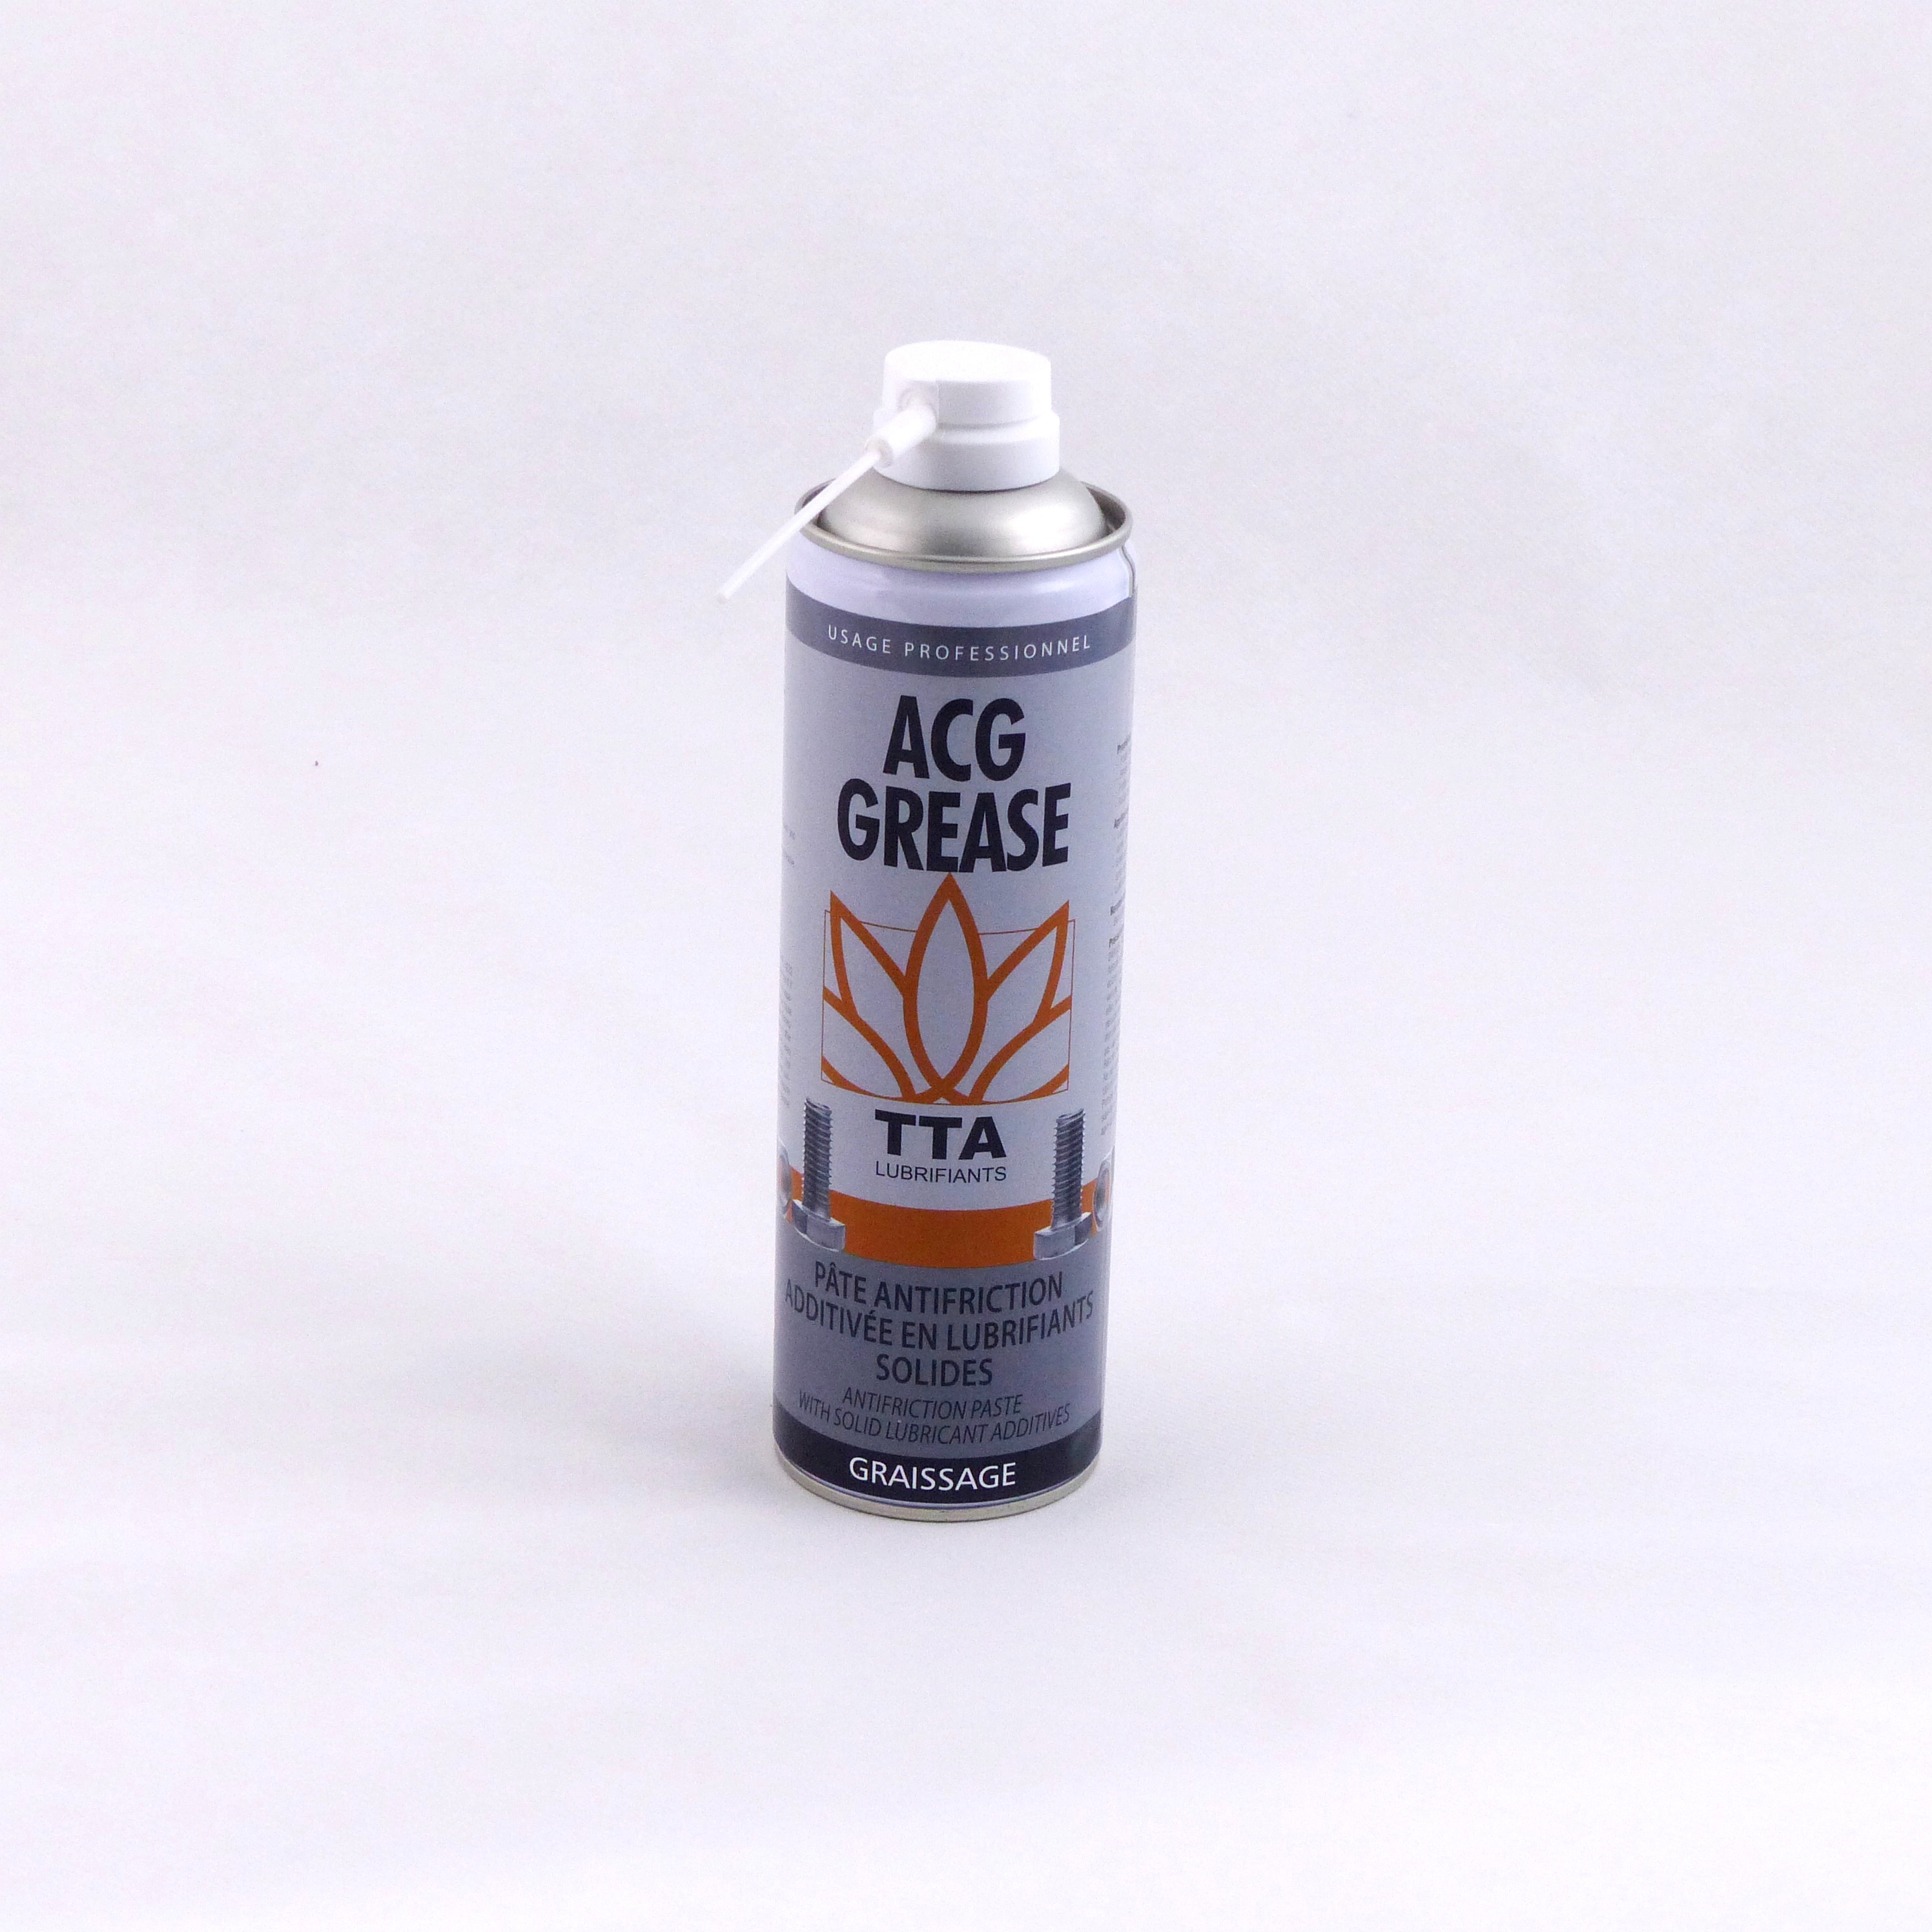 Pate antifriction additivé en lubrifiant solide ACG GREASE AEROSOL 500 ML